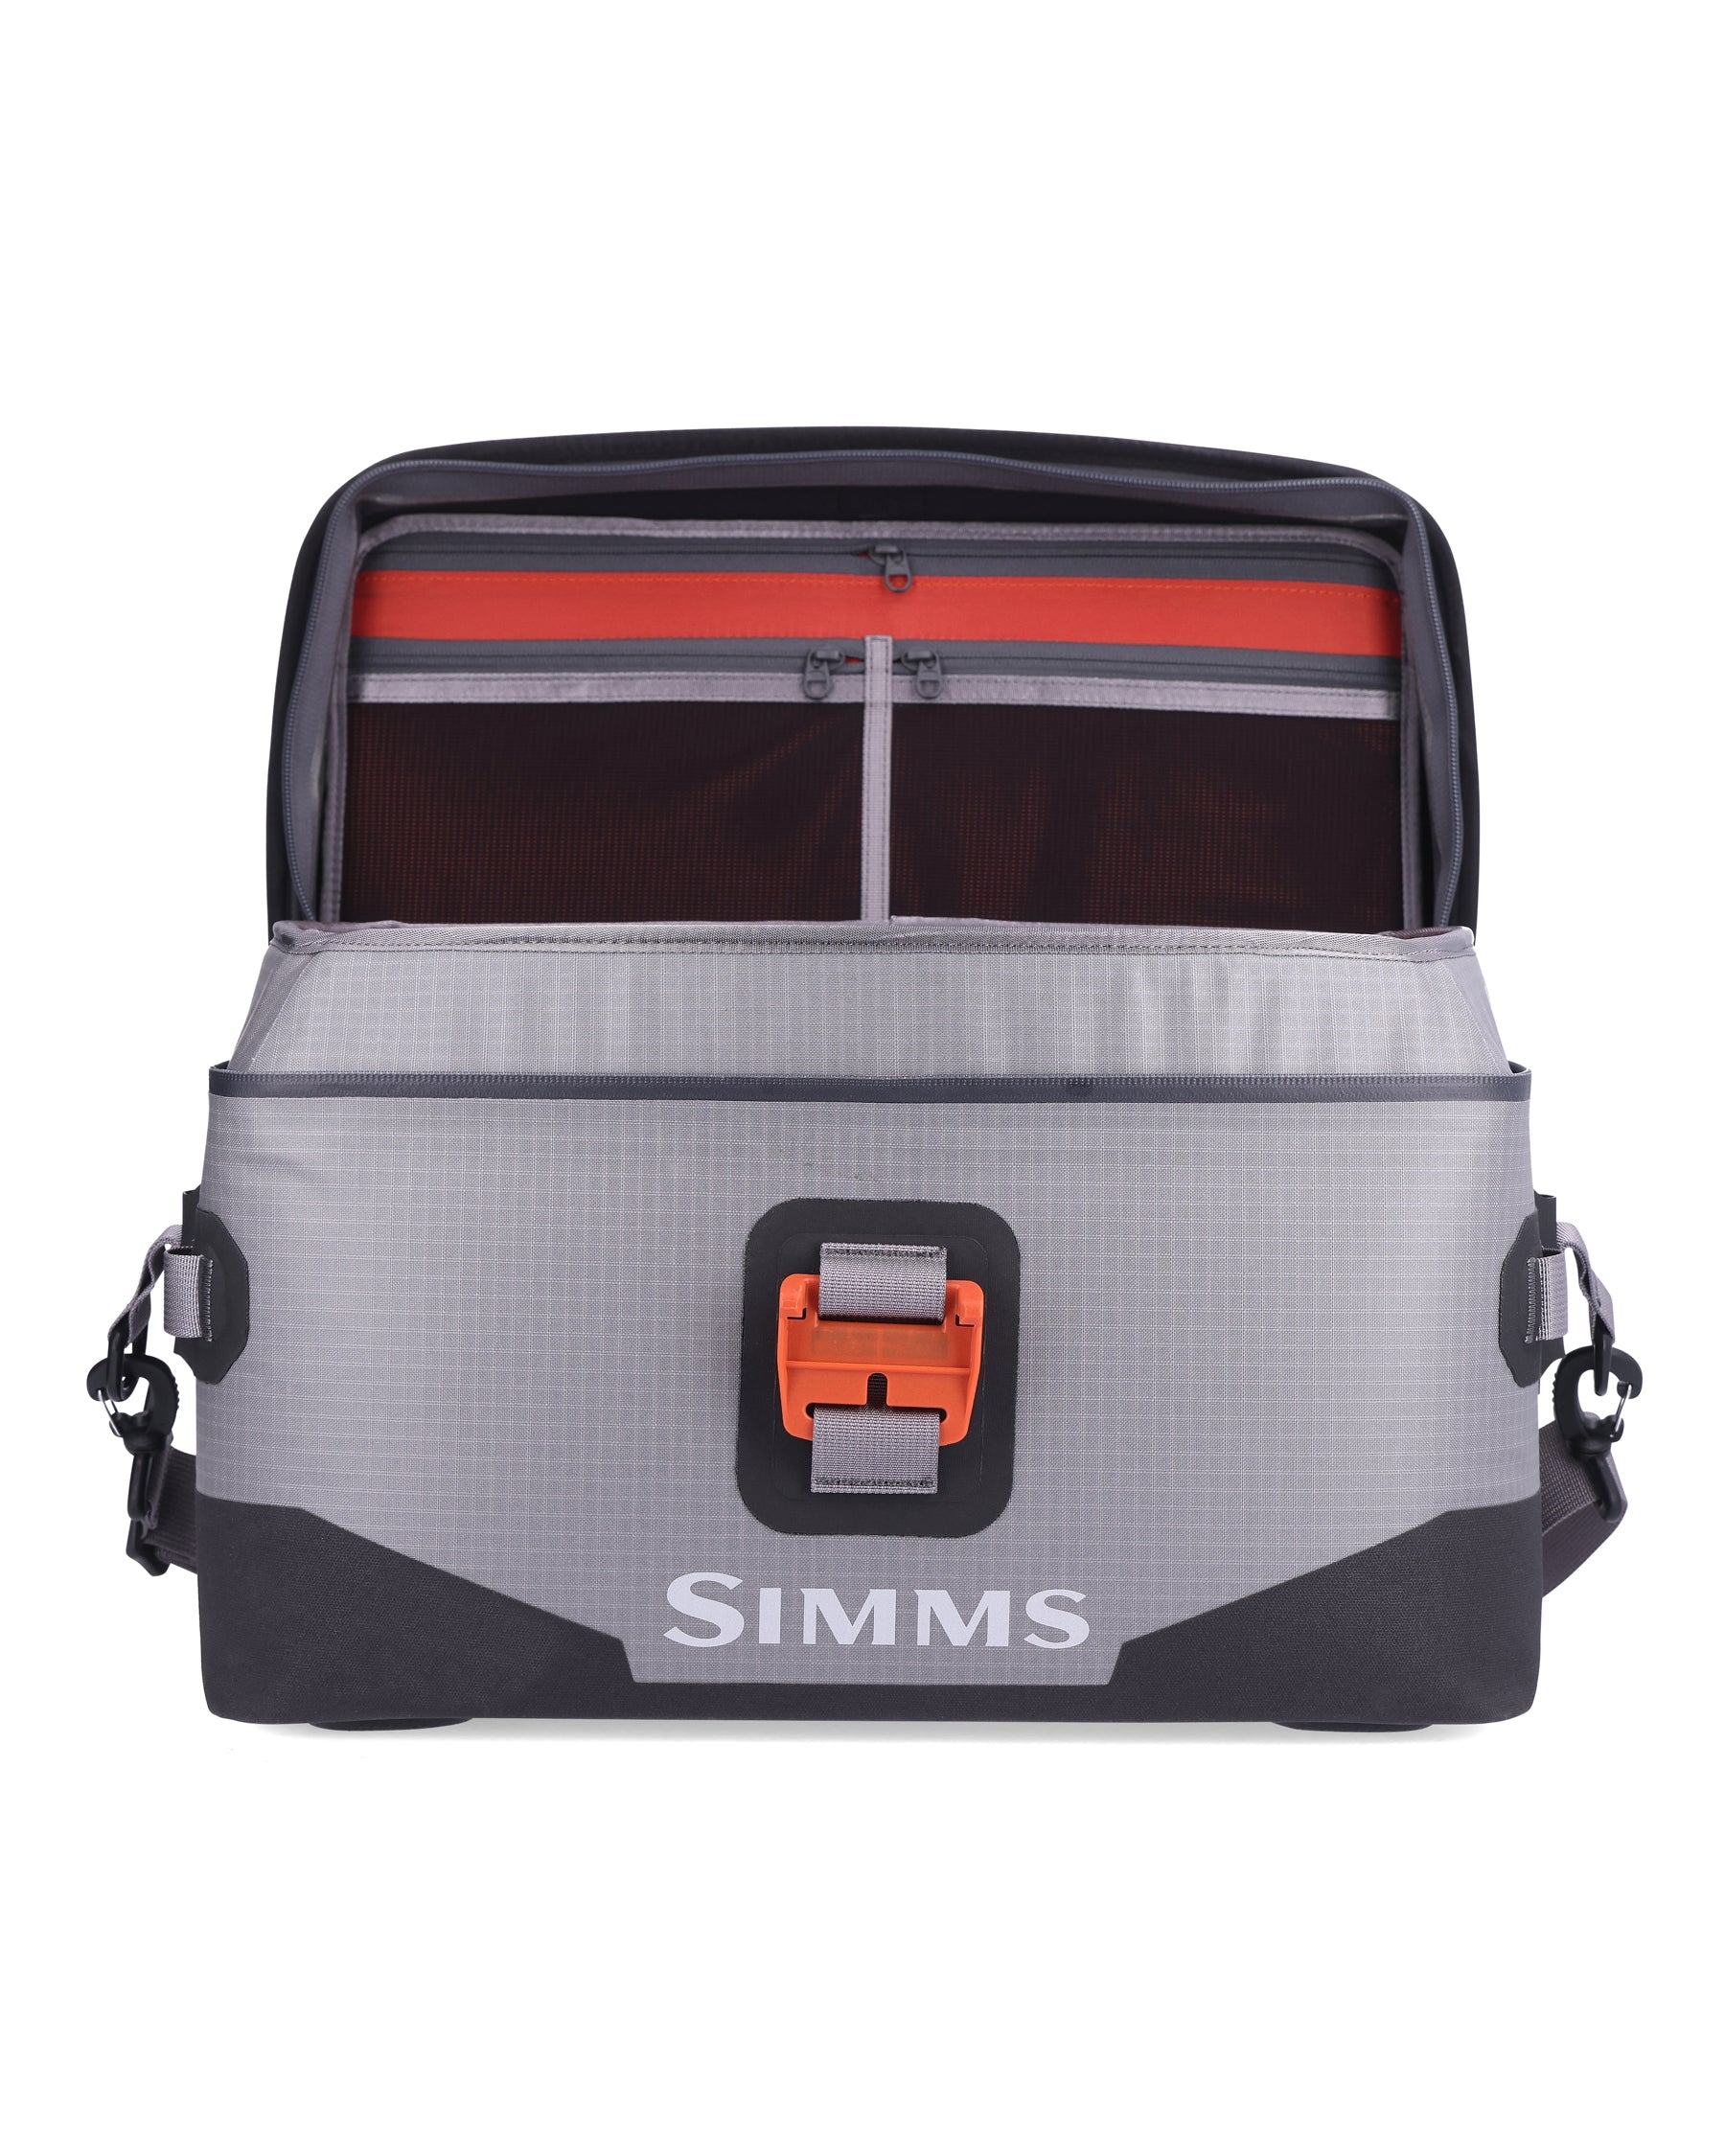 Simms Dry Creek Boat Bag - Small - 20L